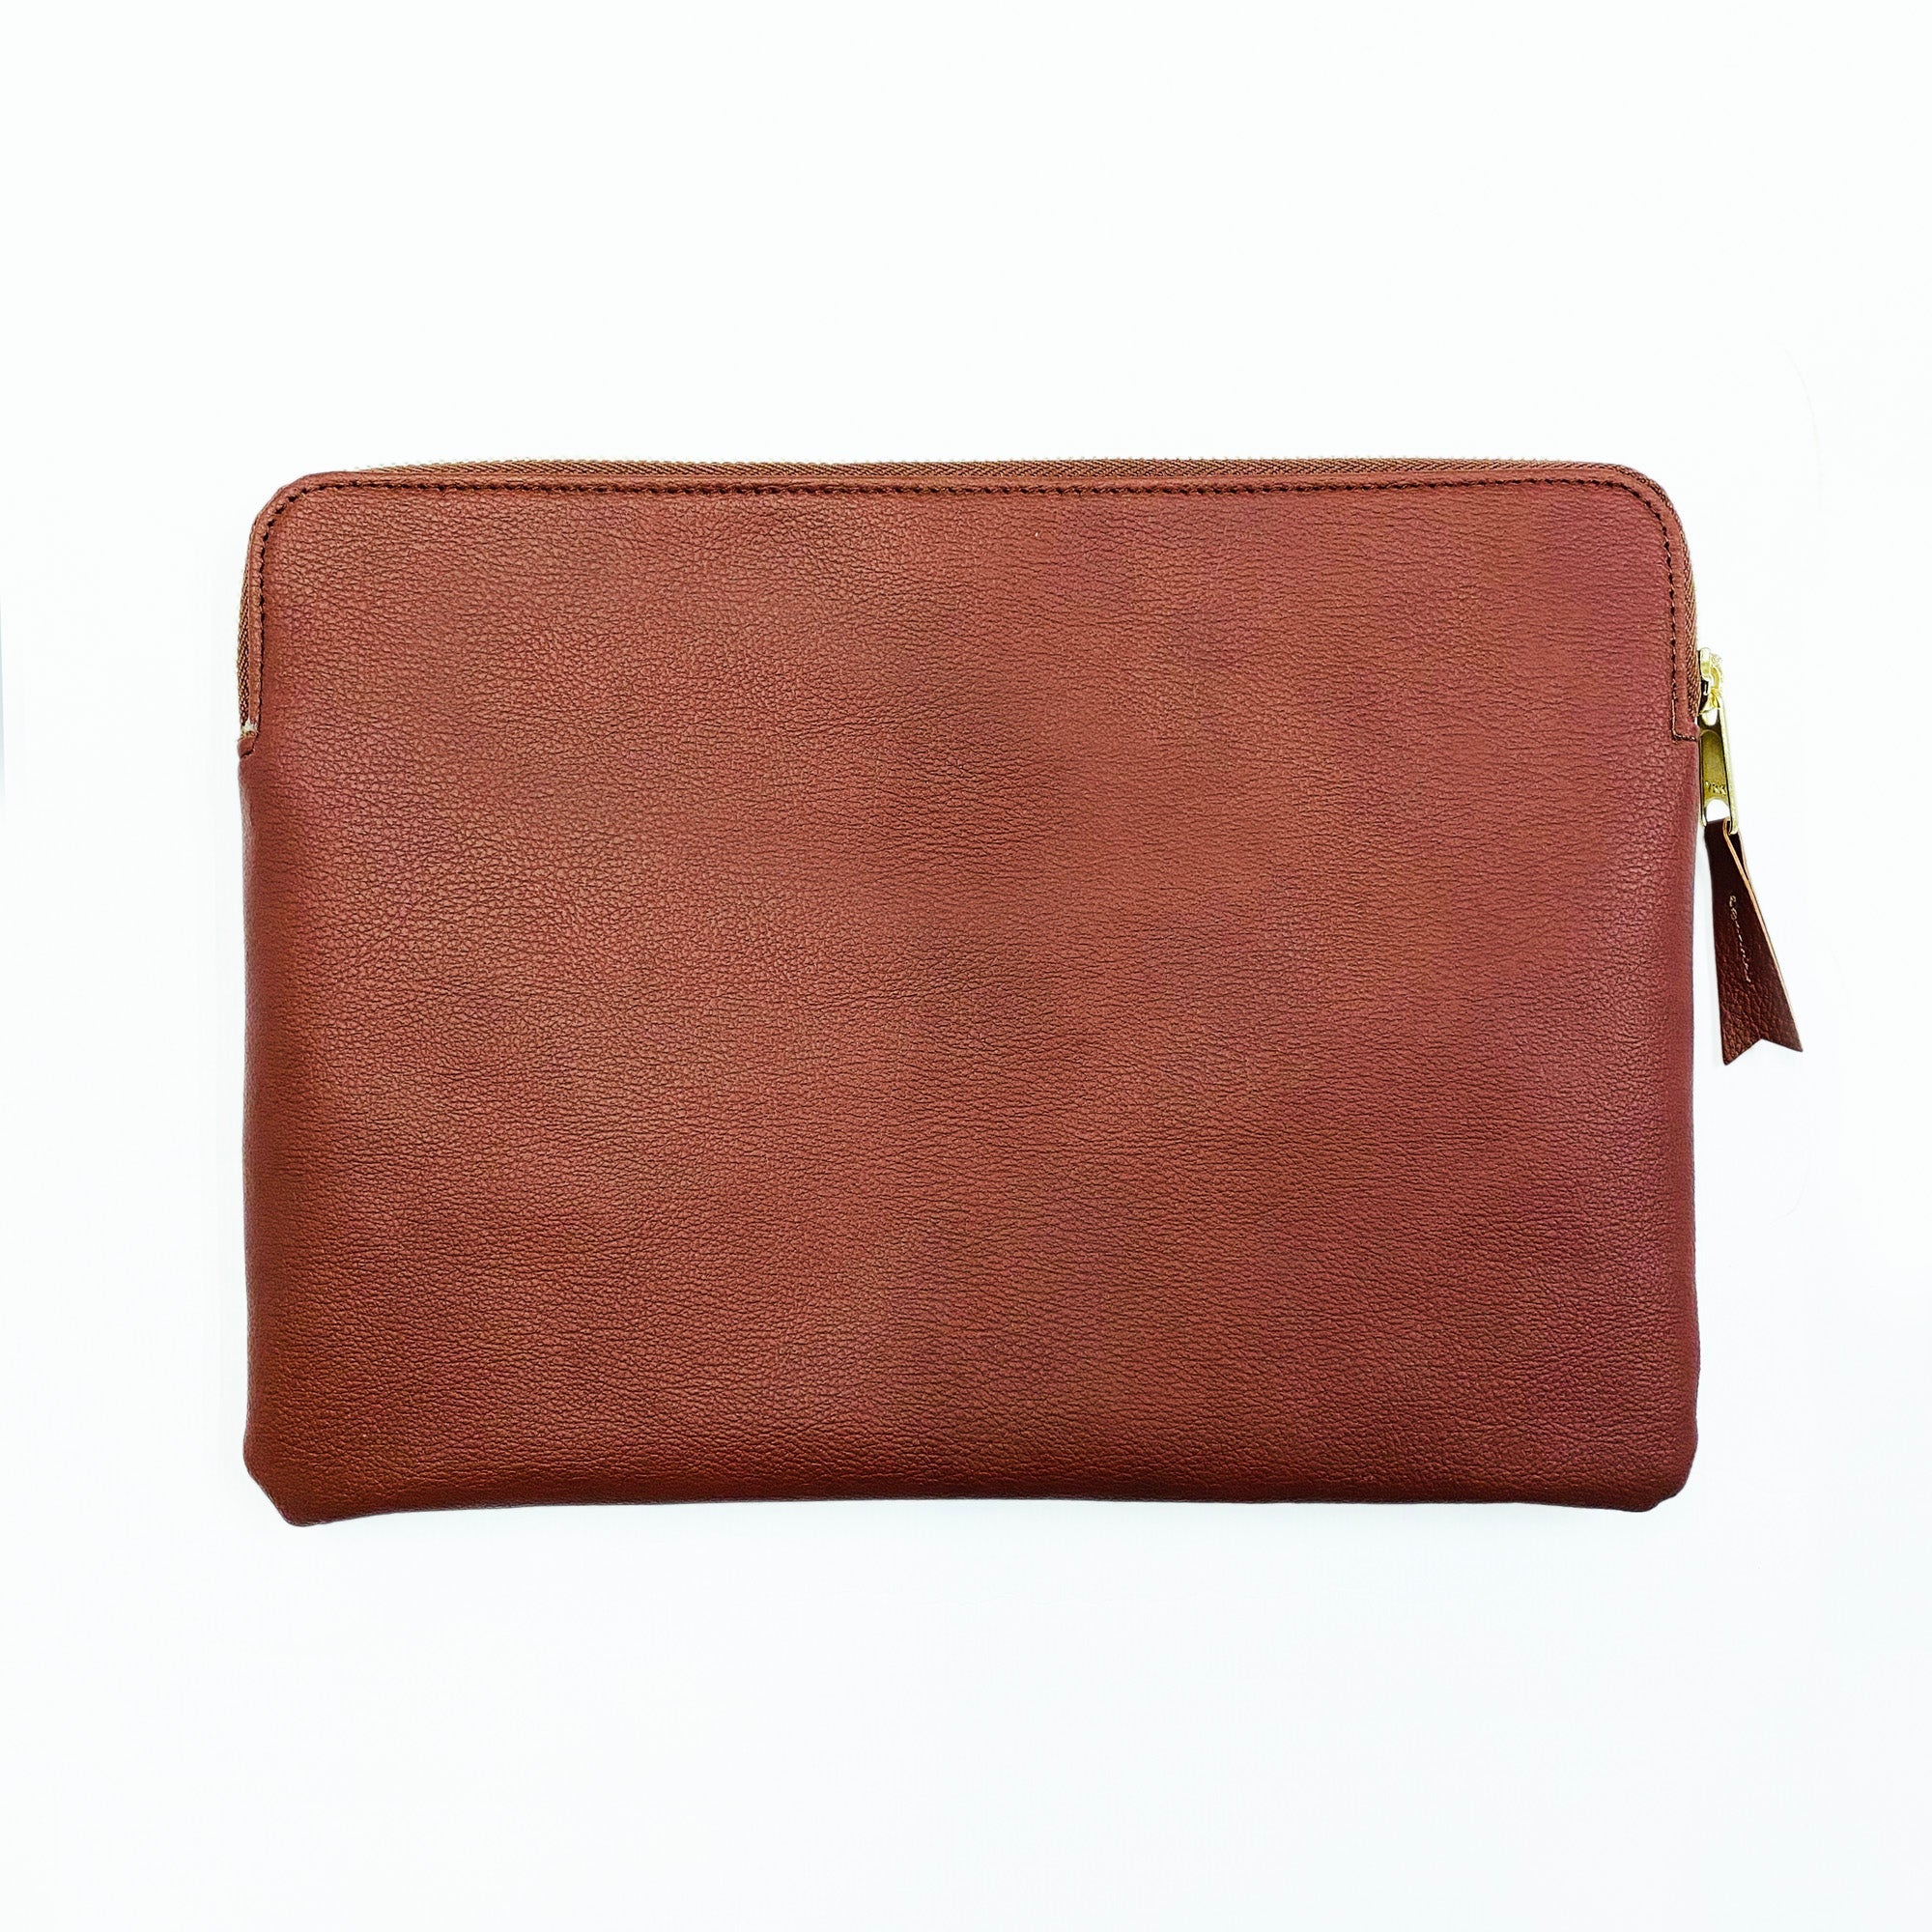 Brown Tablet sleeve with YKK zipper closure